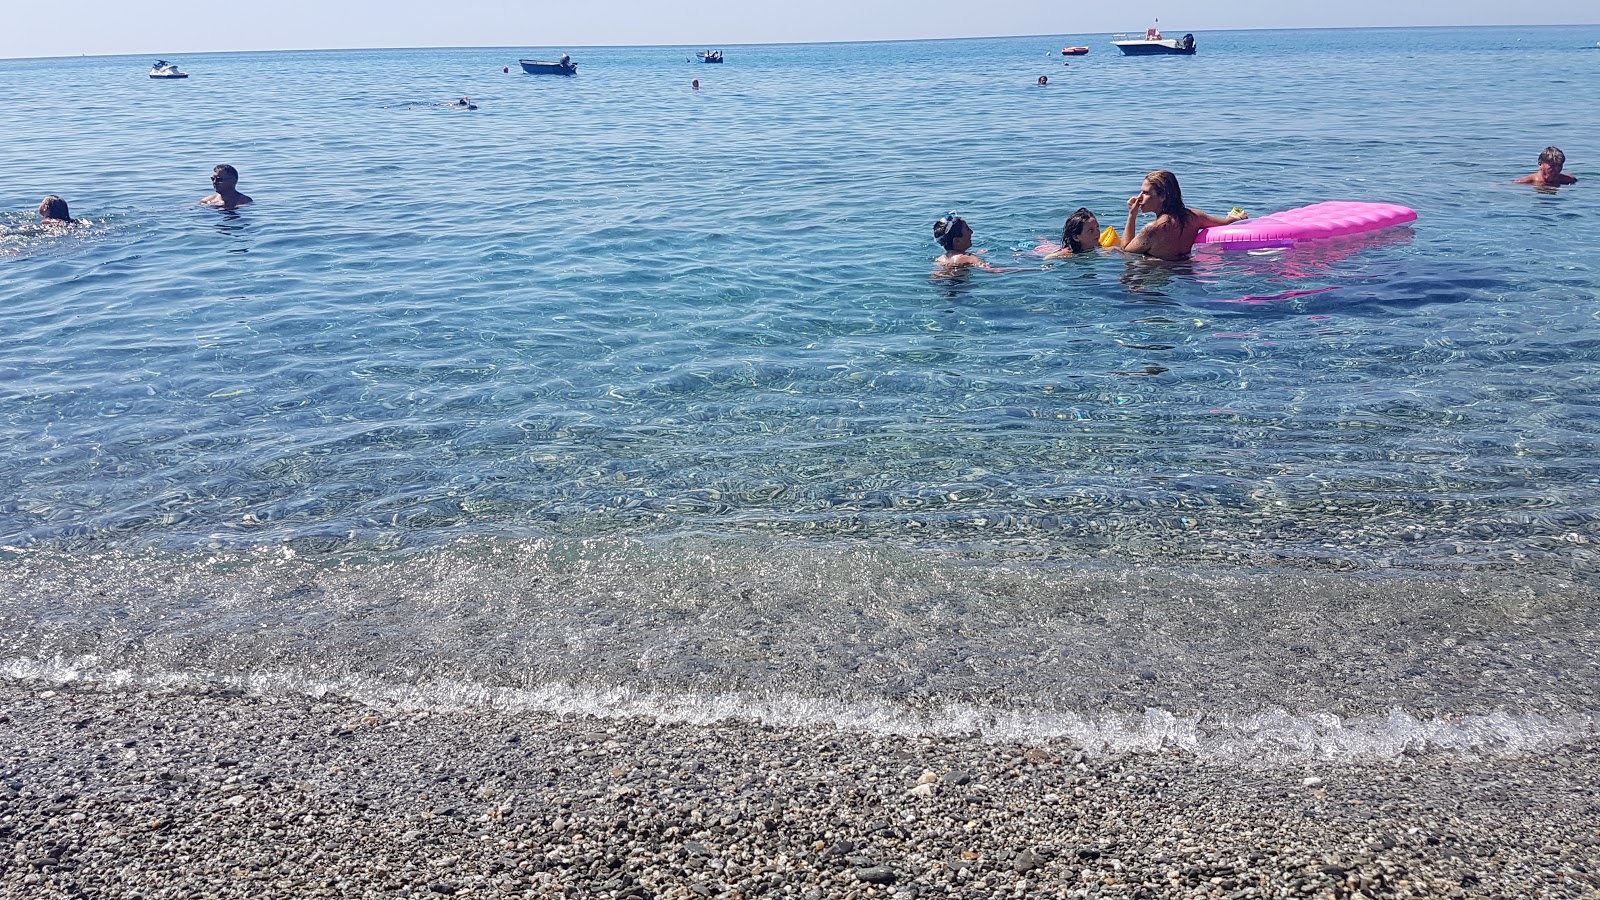 Fotografie cu Ultima Spiaggia cu nivelul de curățenie in medie